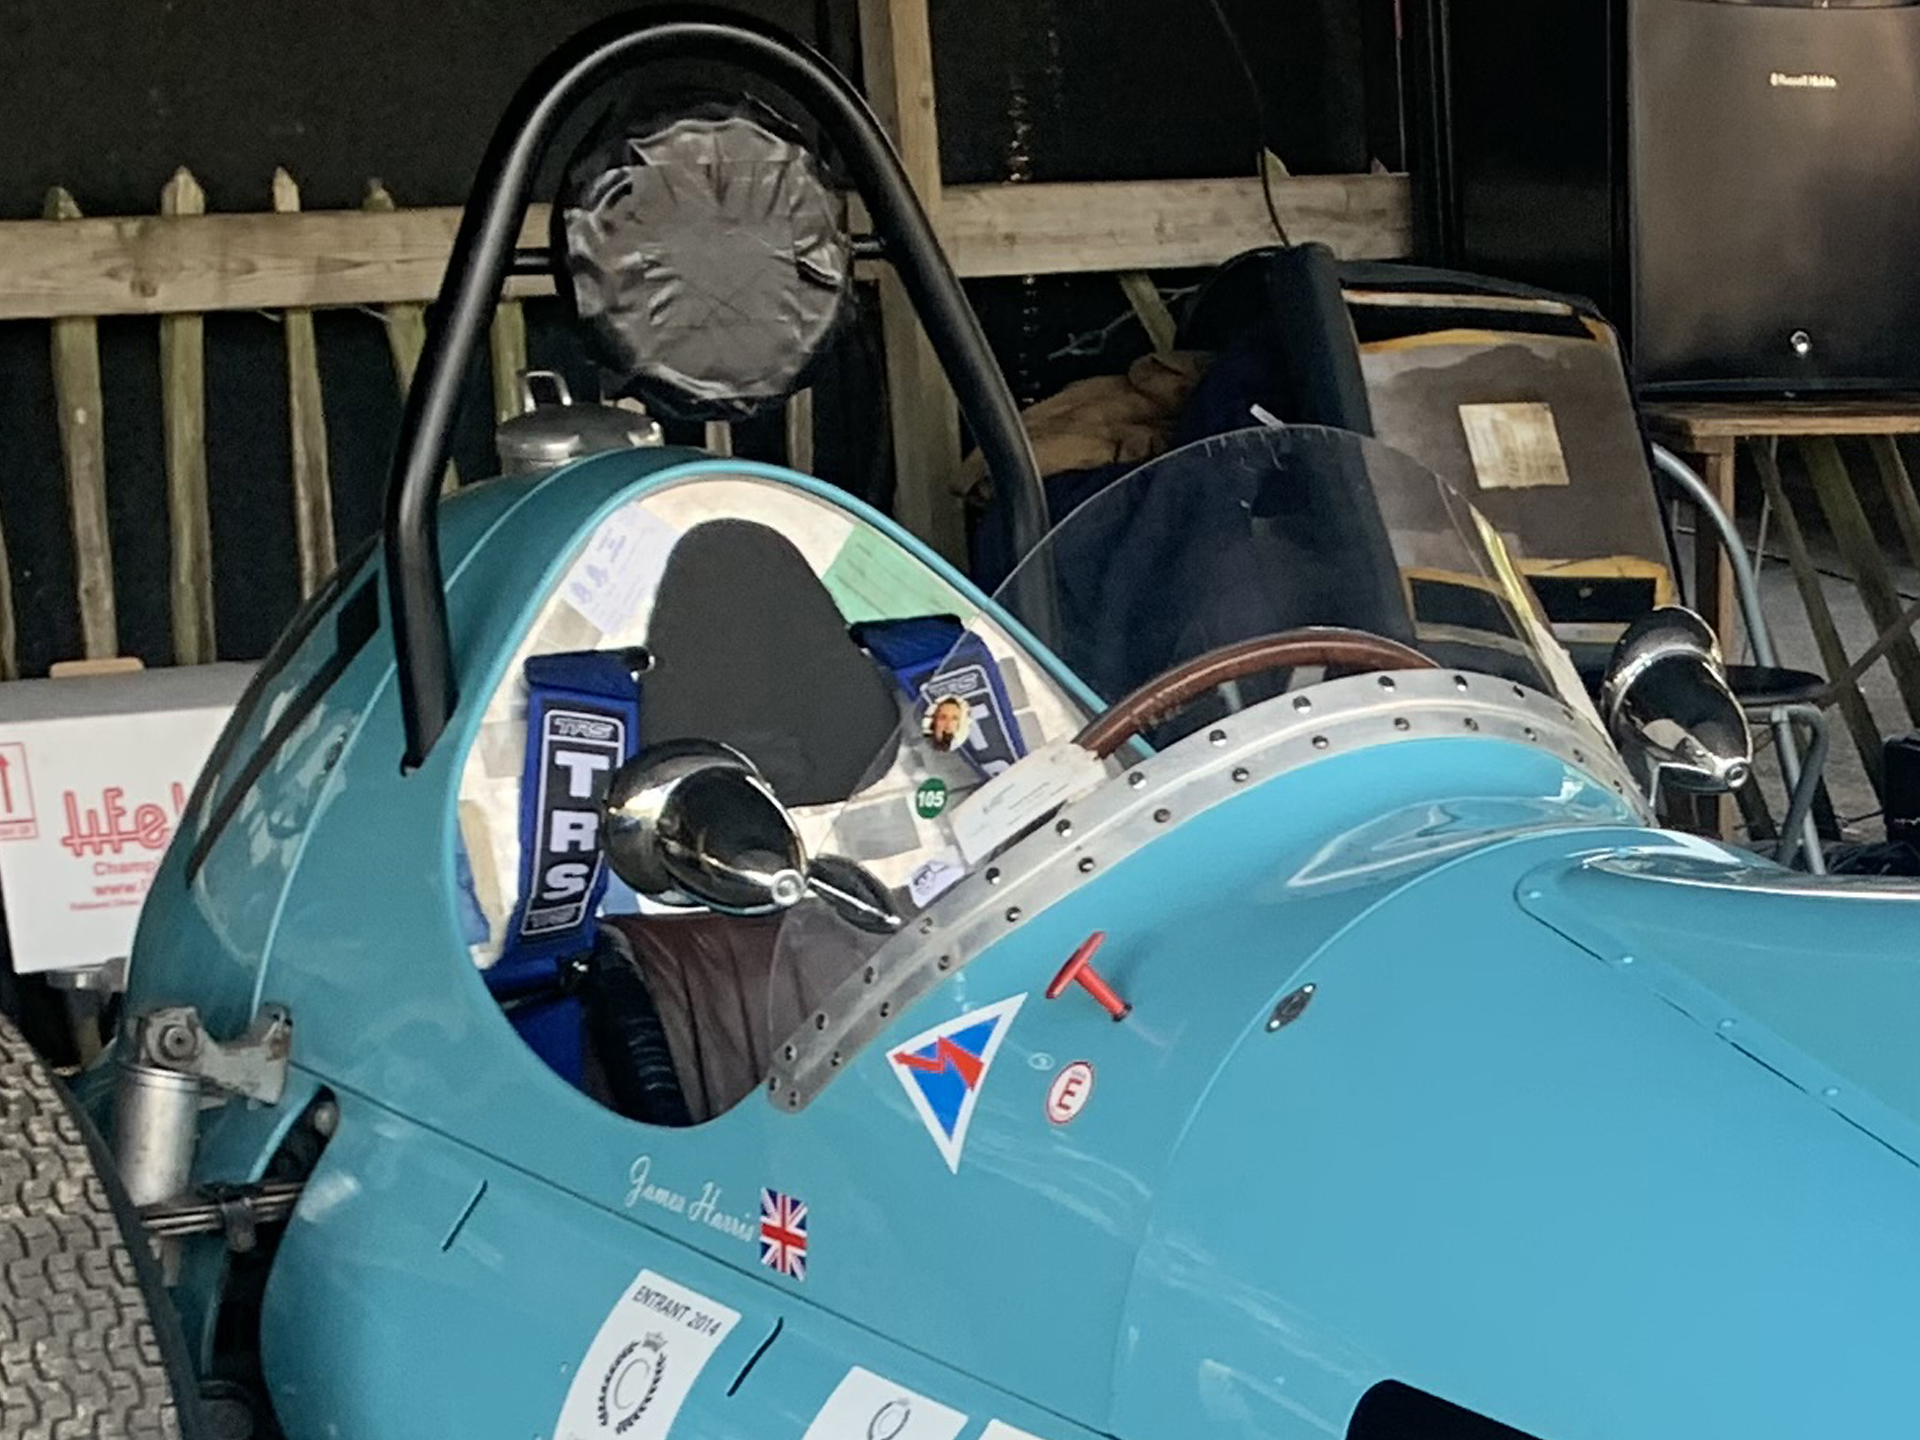 AC Bristol Monoposto cockpit